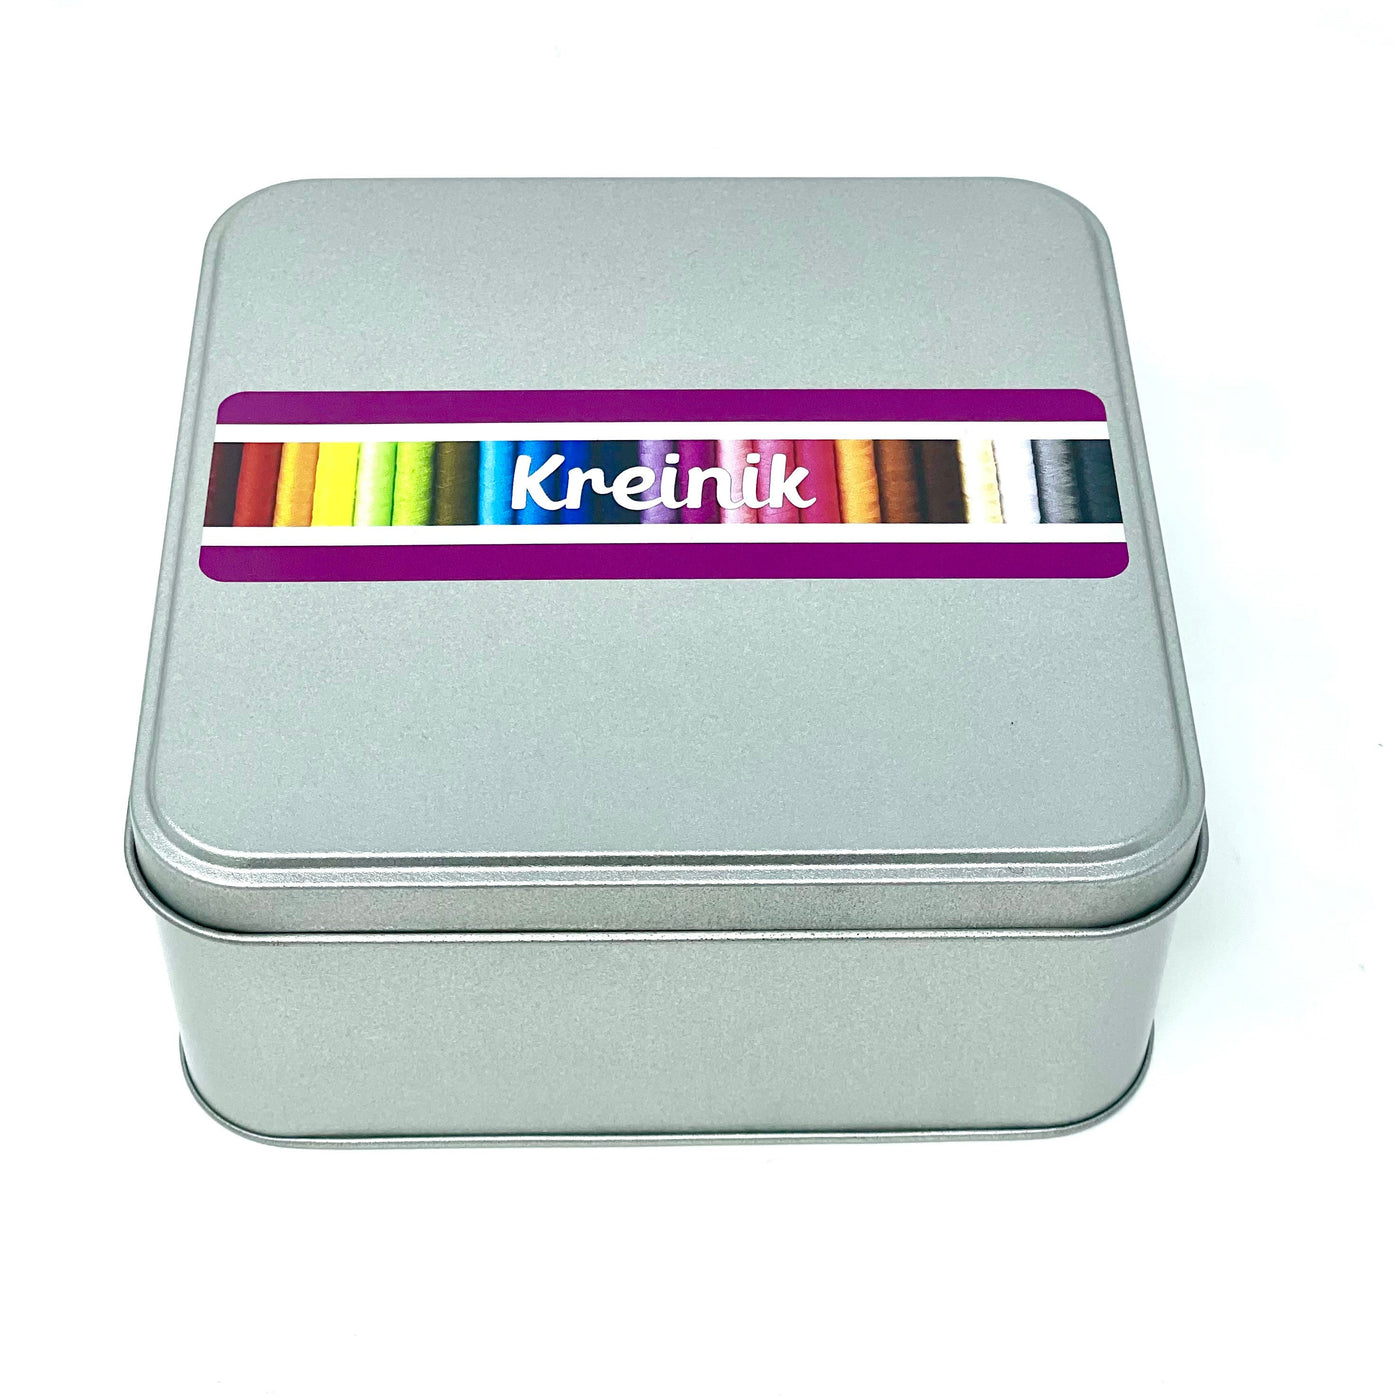 Kreinik storage tin with foam insert to hold 25 kreinik spools (not included)